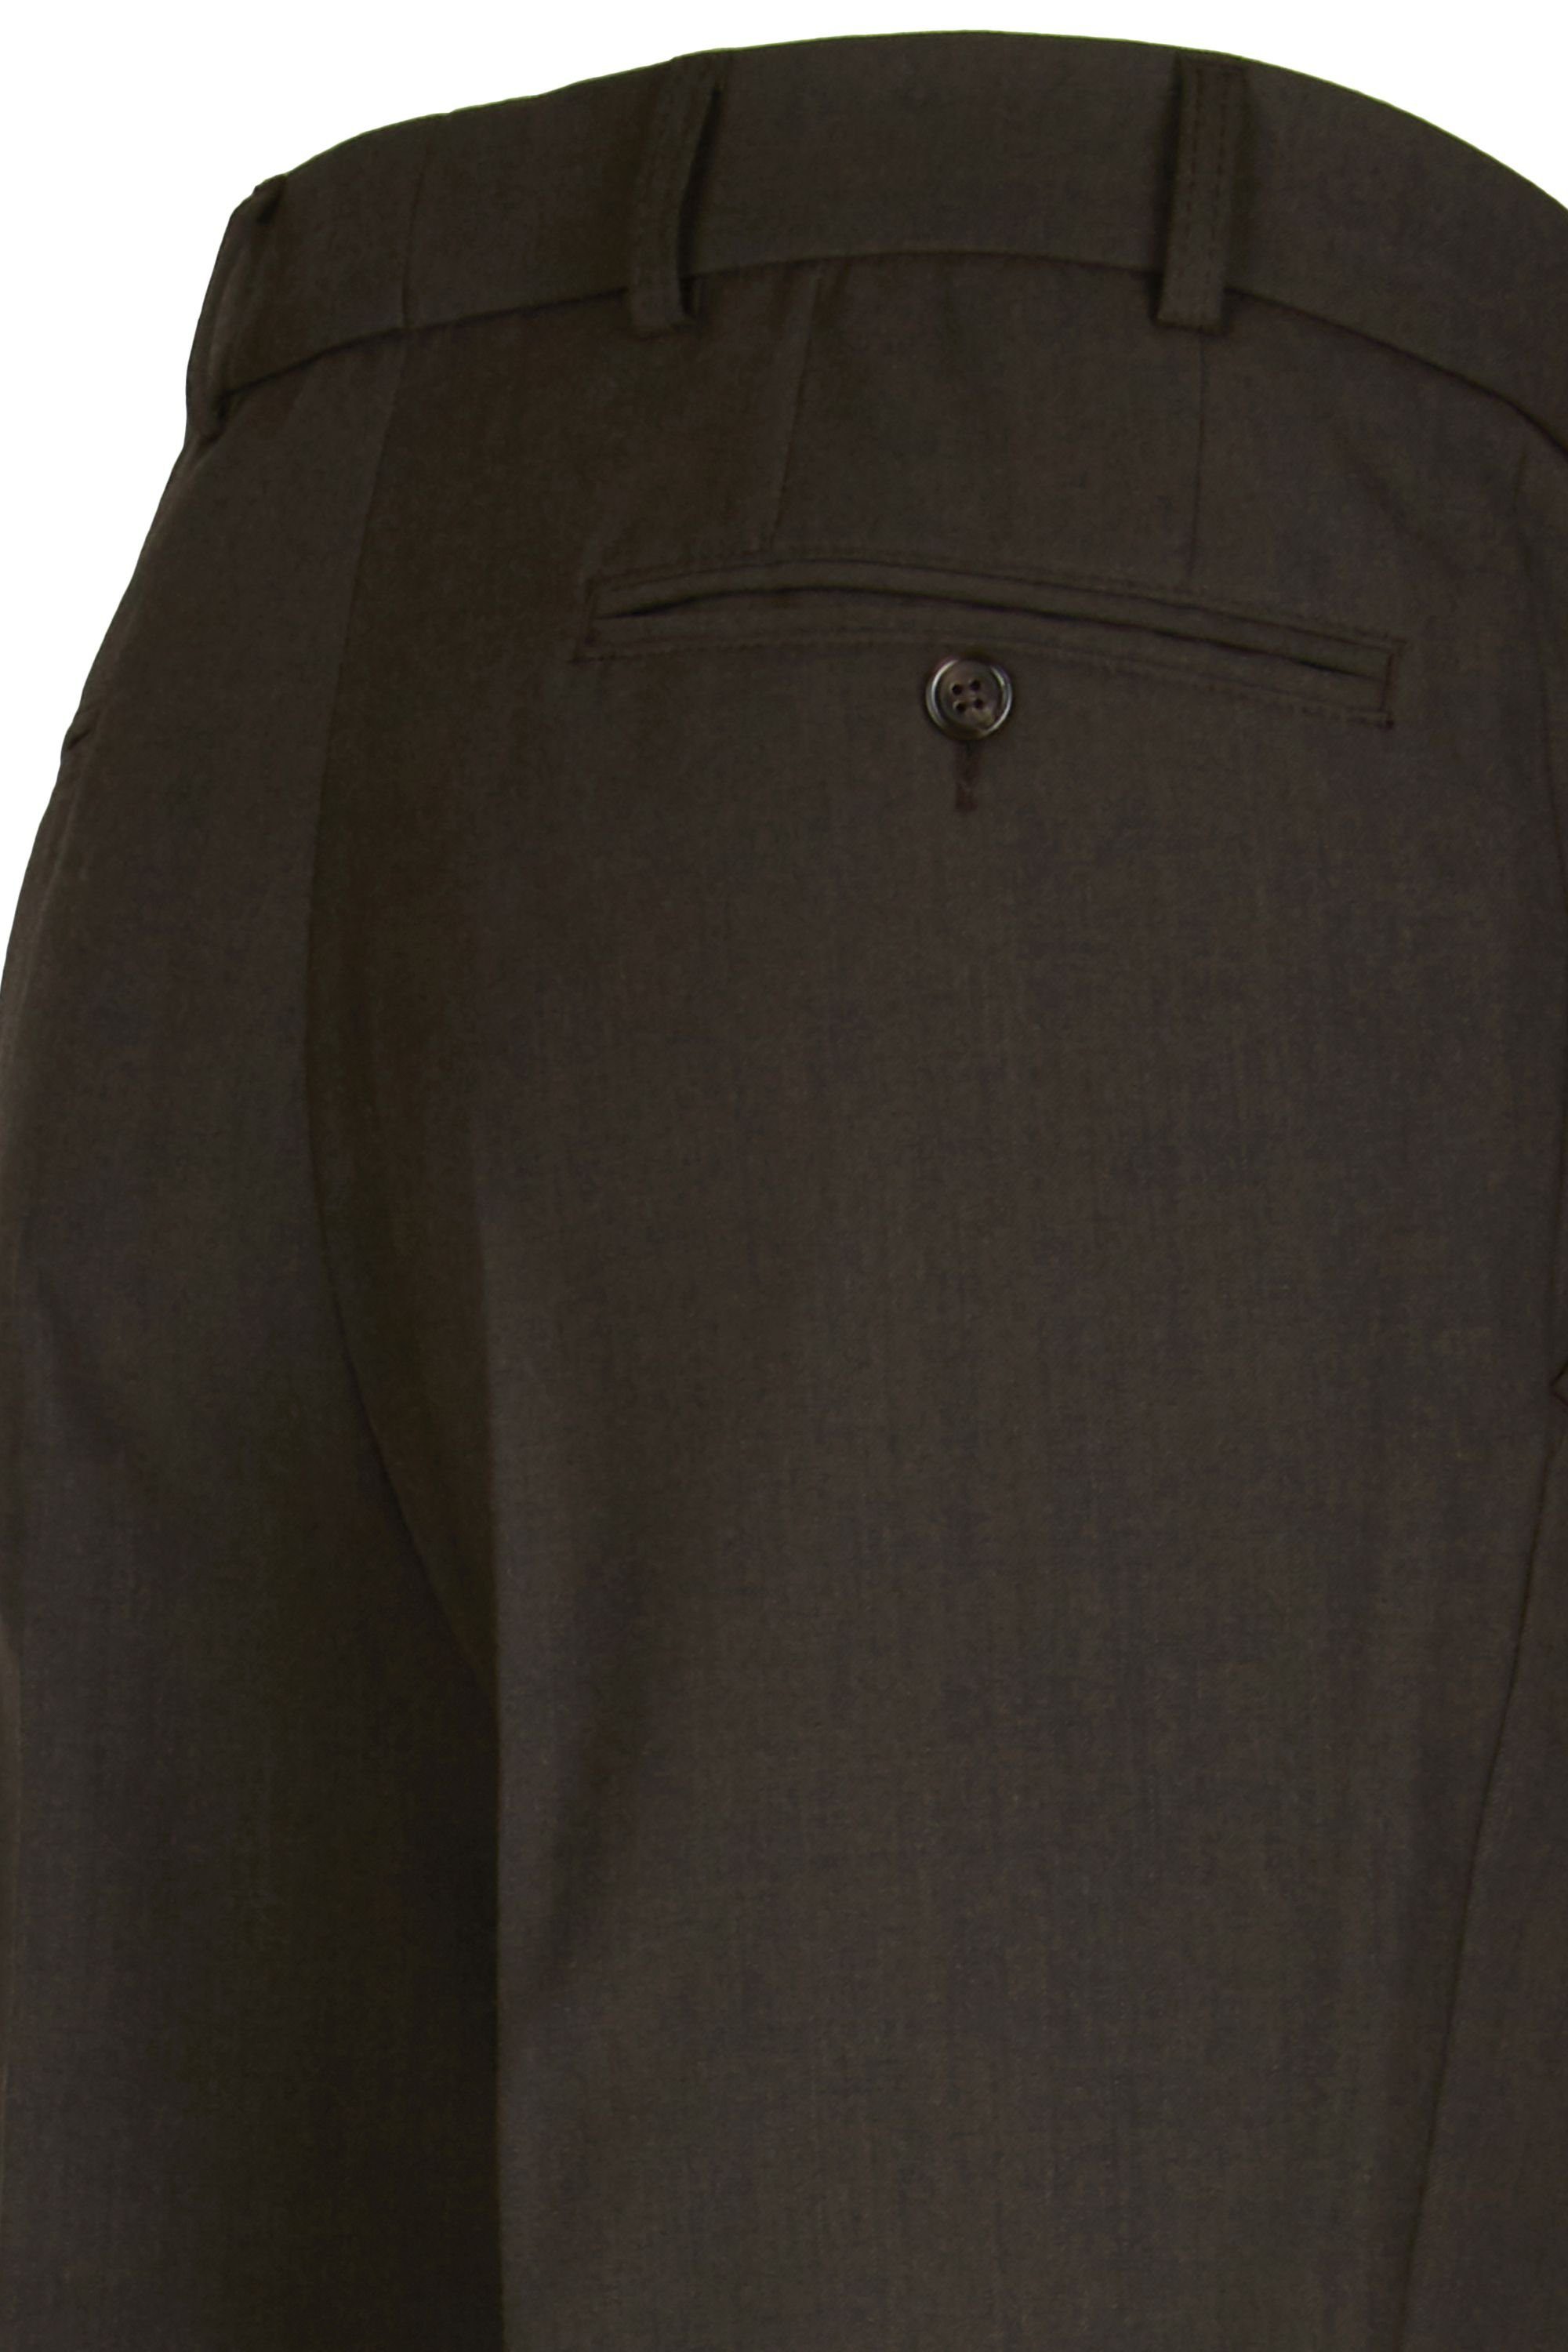 Businesshose (28) Front Fit Flat aubi: Anzughose Stoffhose Modell aubi 26 Perfect braun Herren